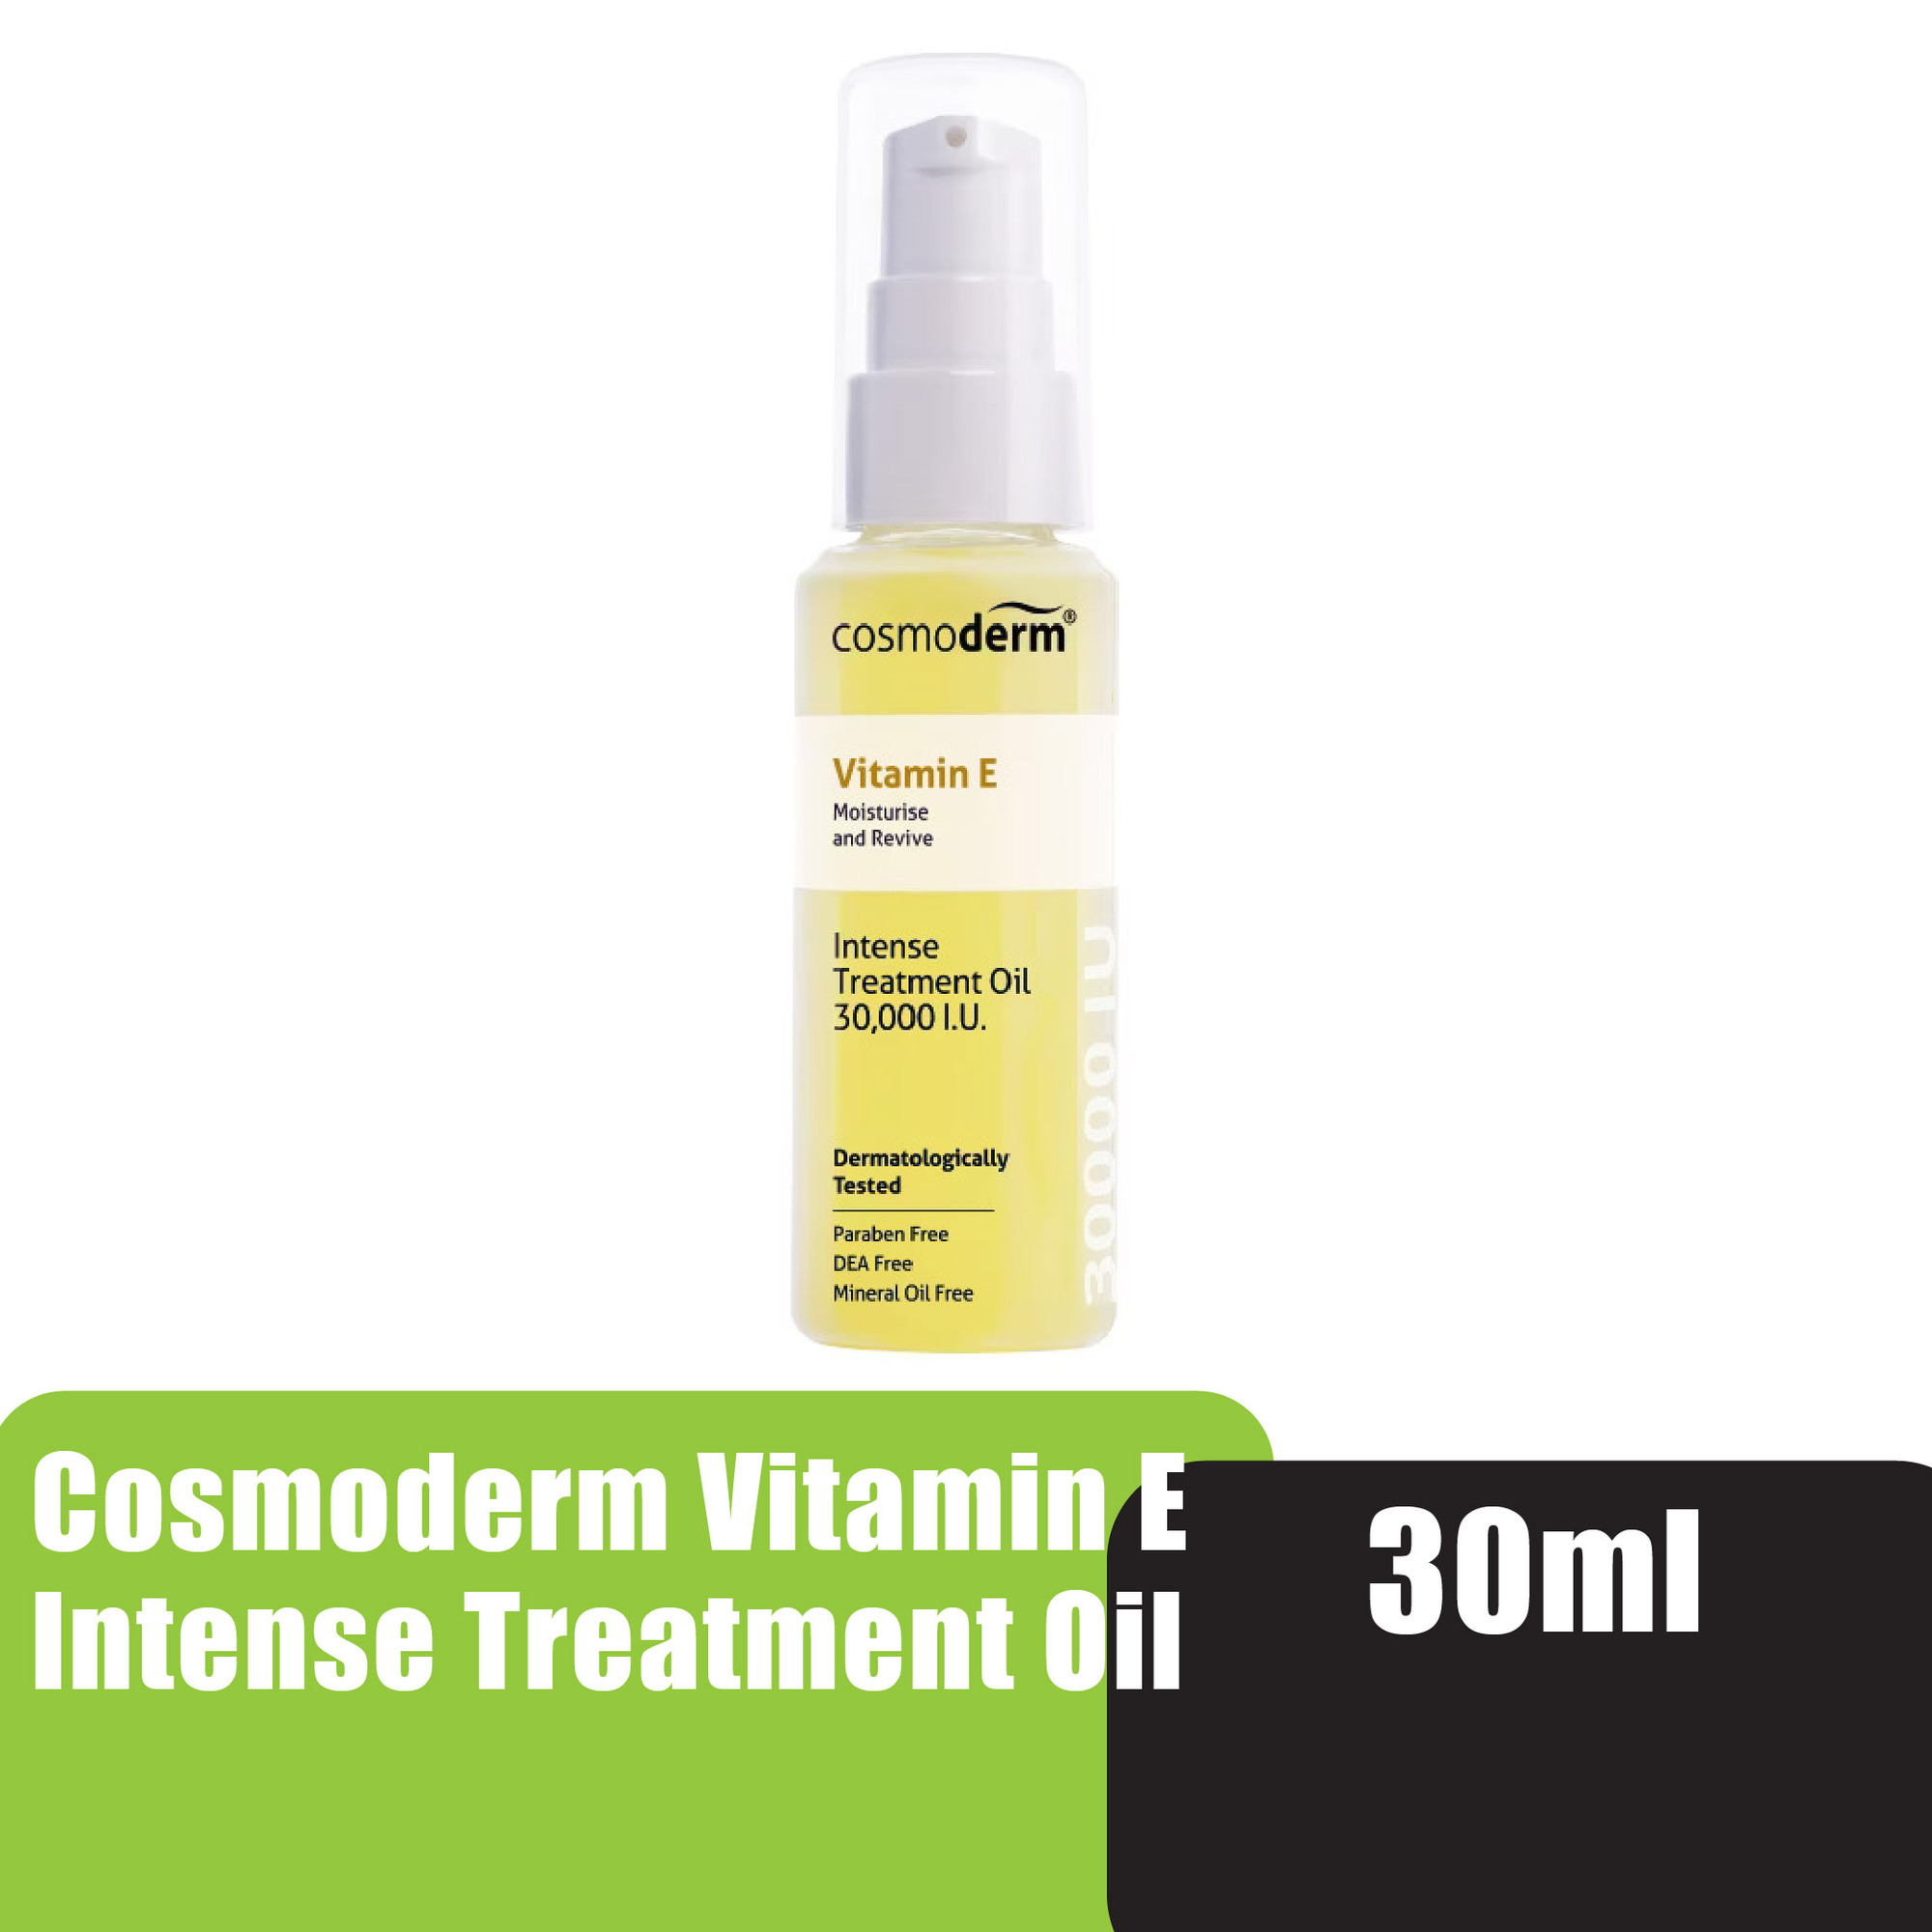 Cosmoderm Vitamin E Intense Treatment Oil 30,000 I.U. 30ml